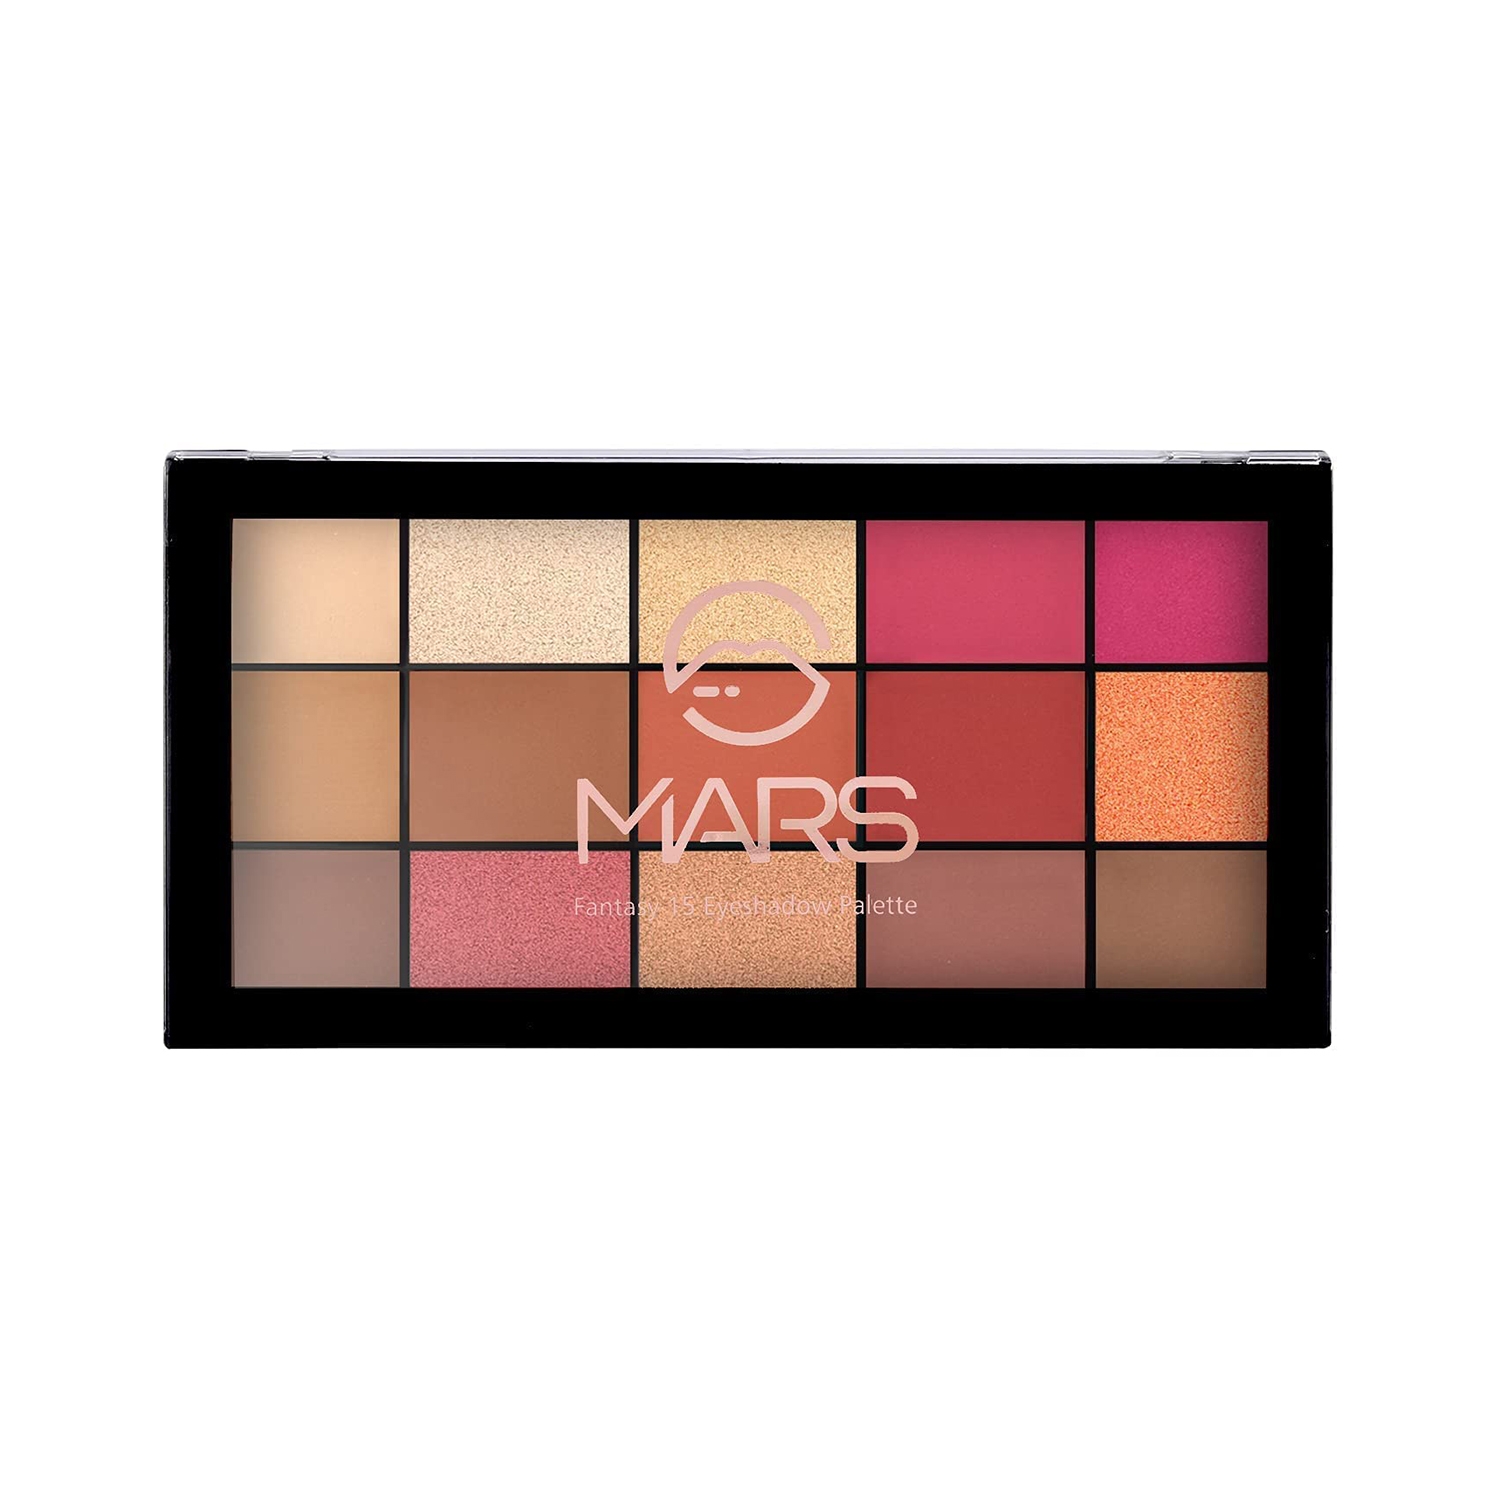 MARS Fantasy 15 Eyeshadow Palette - 2 (22.5 g)